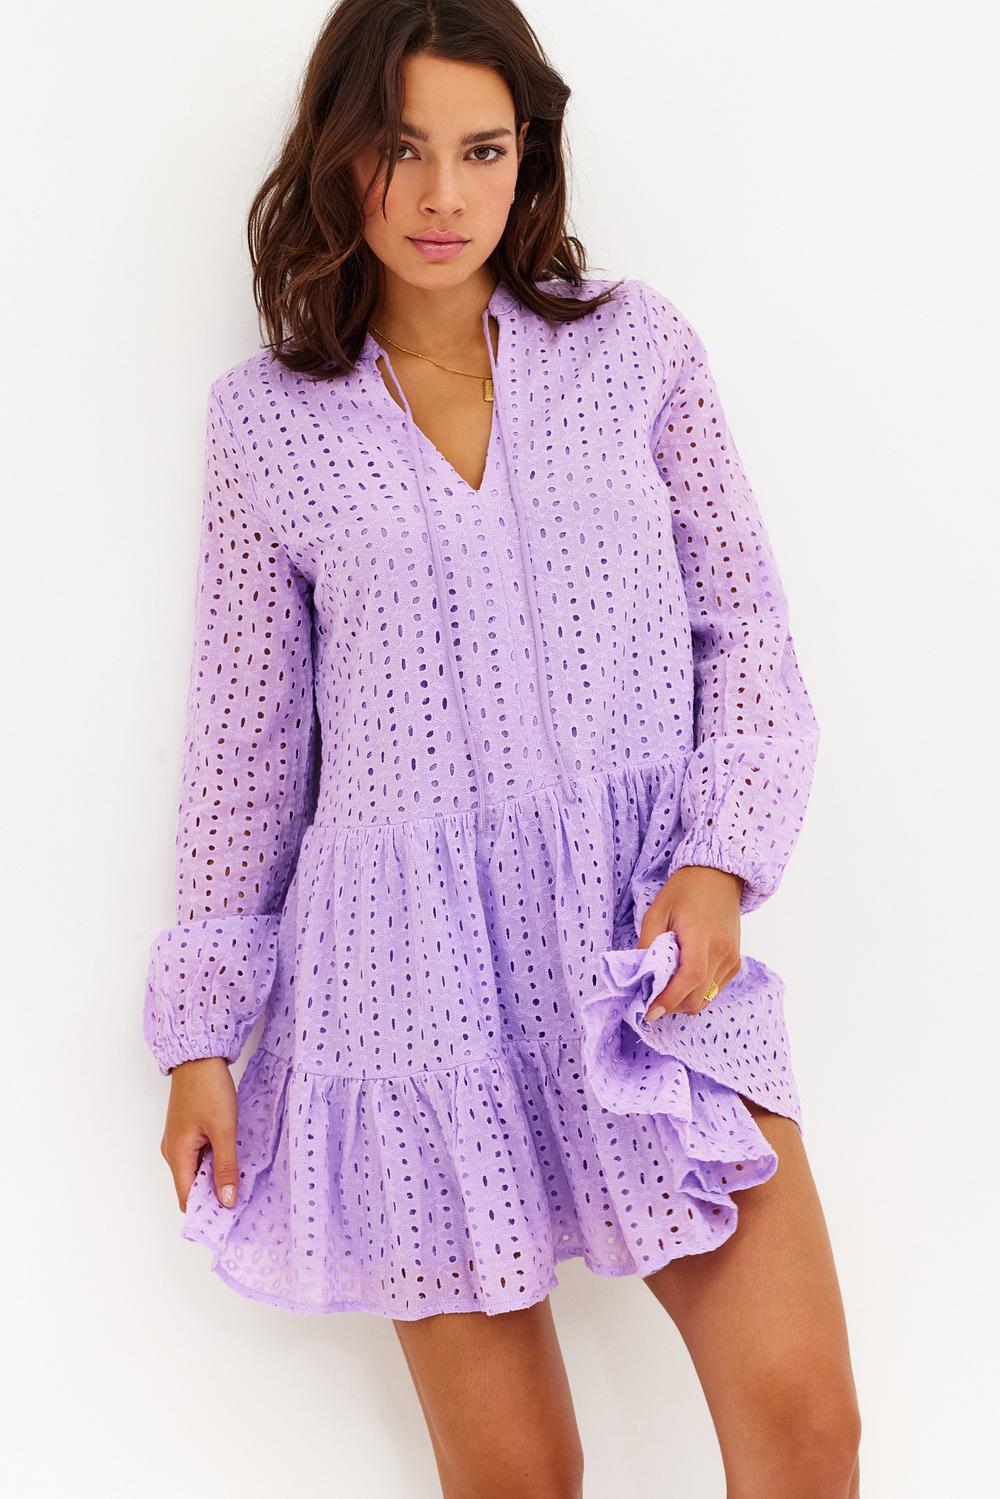 Lilac a-line dress